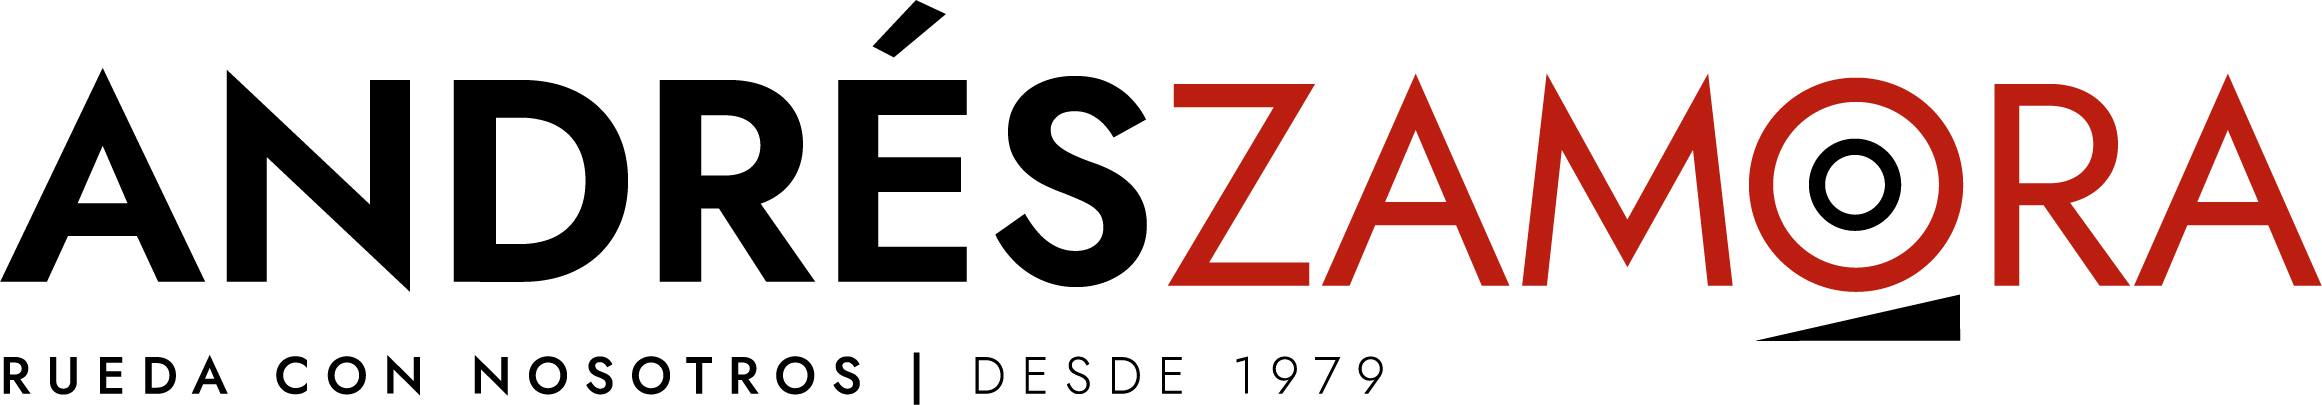 LogotipoAndresZamora - Jose